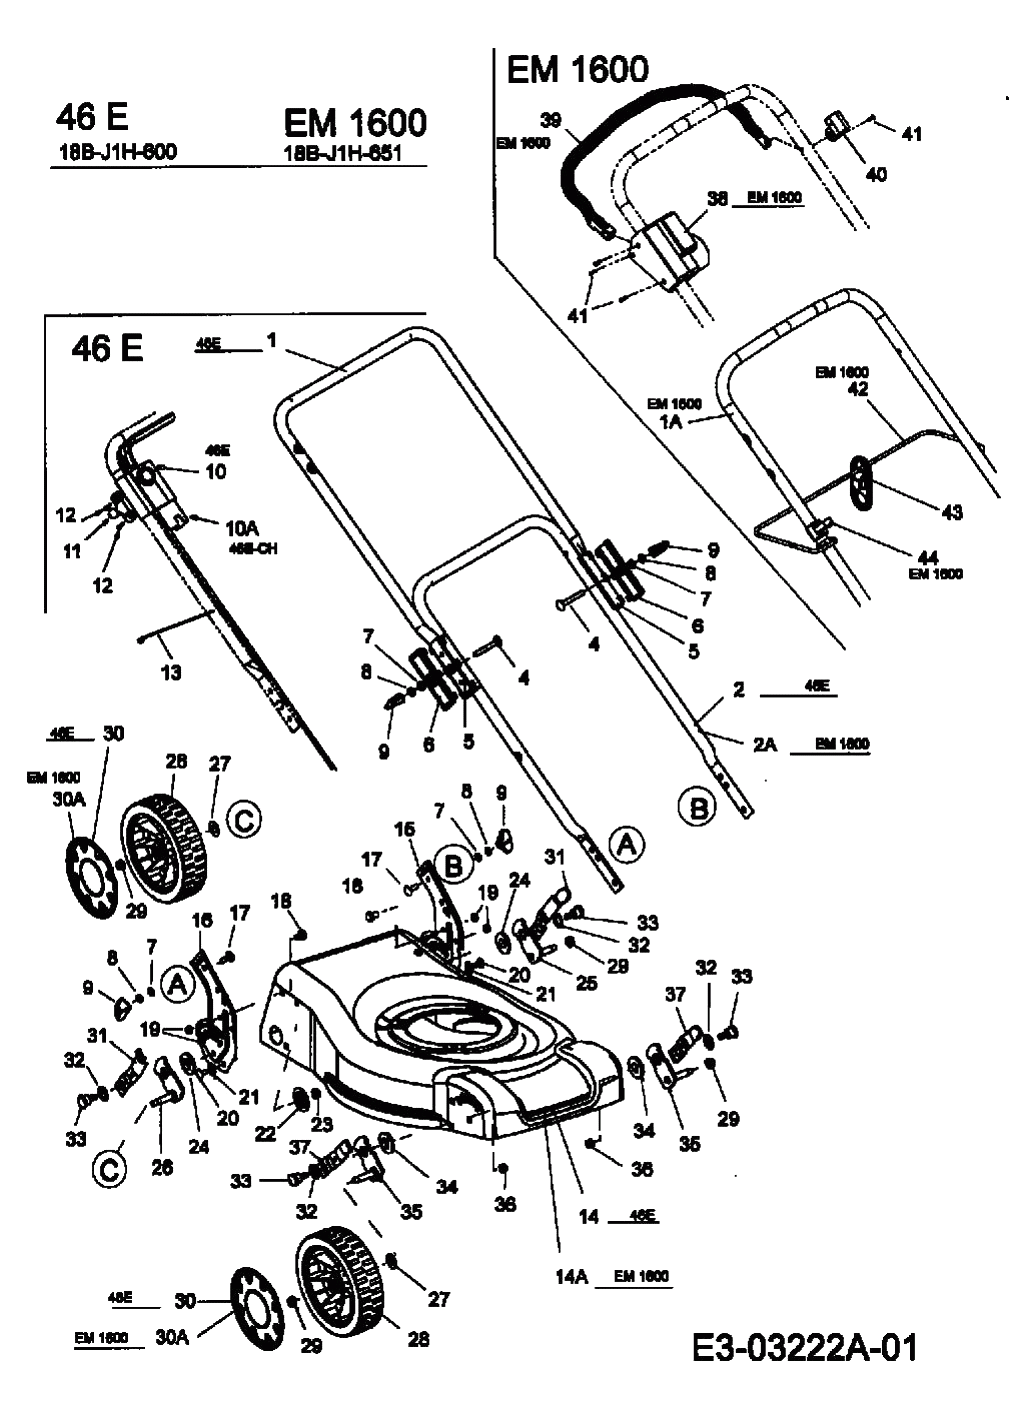 MTD Артикул 18A-J1H-600 (год выпуска 2006). Ручка, колеса, регулятор высоты реза